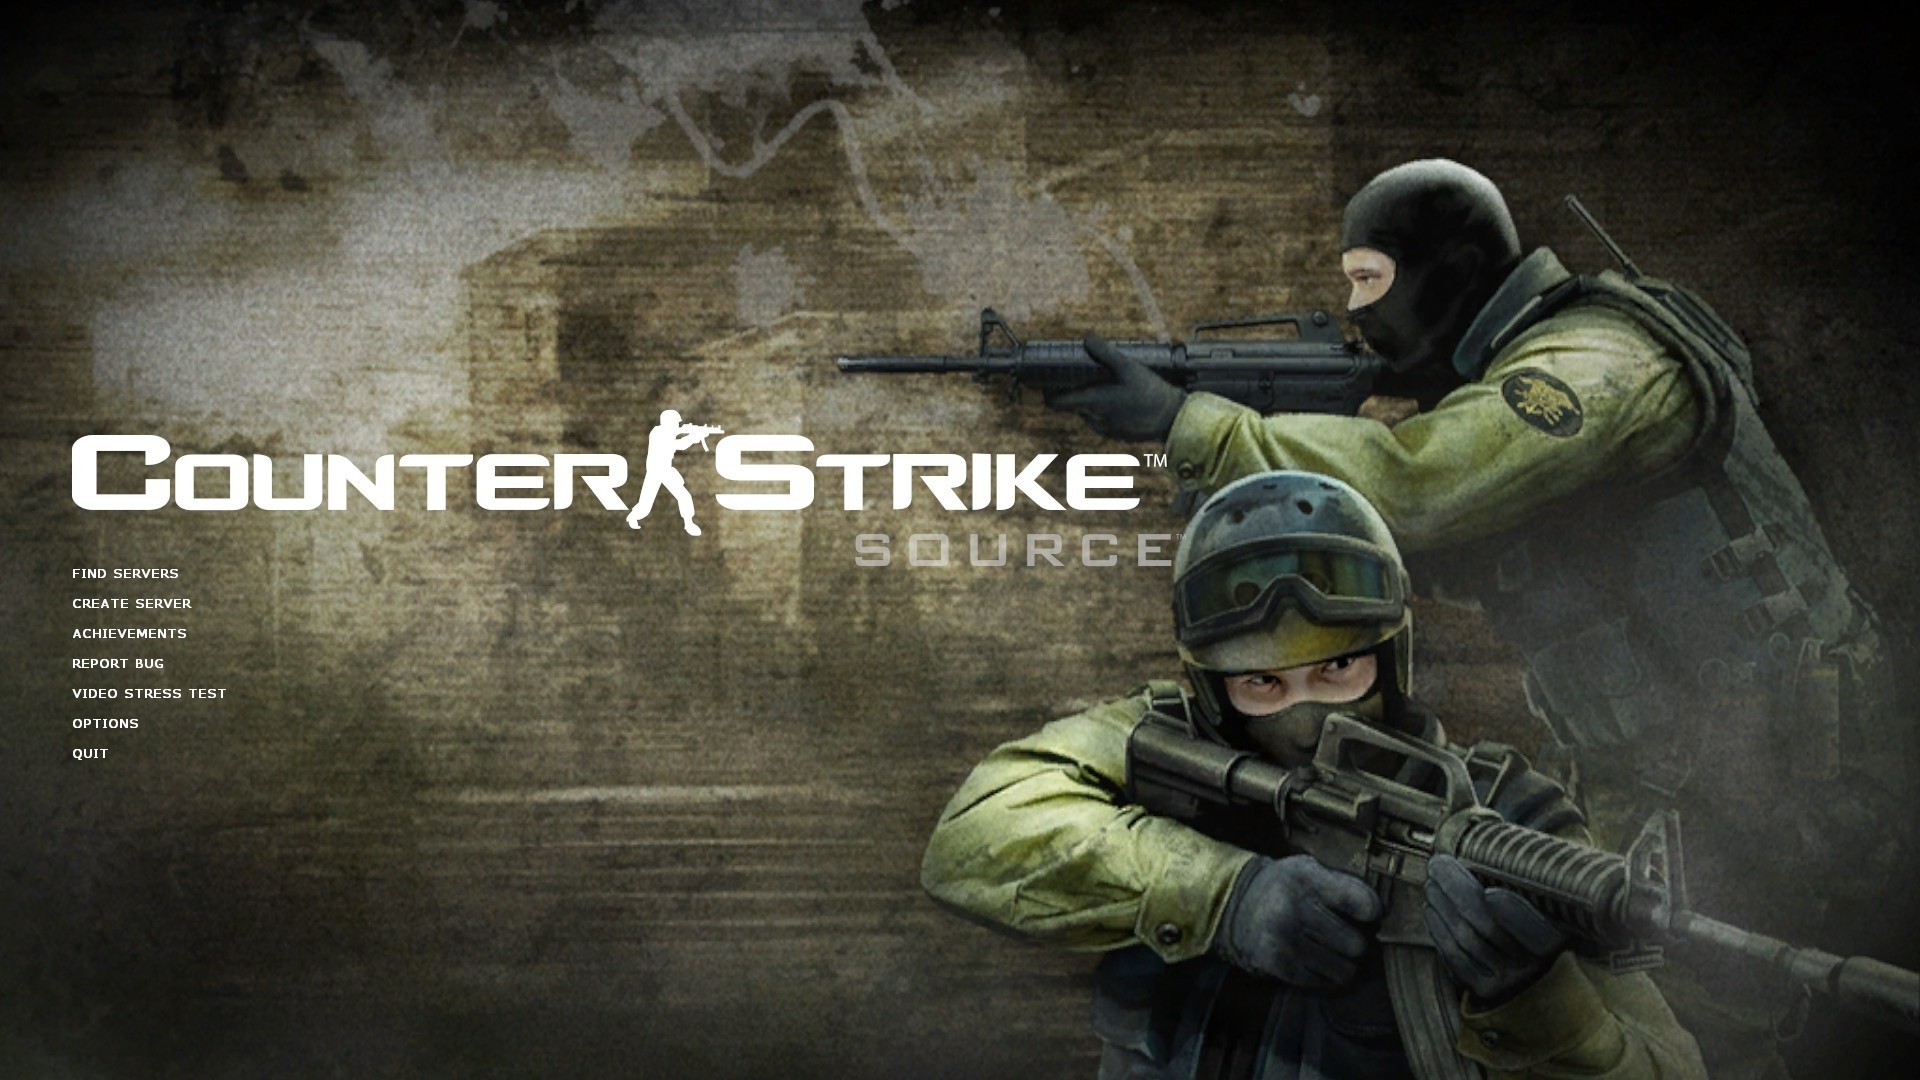 Counter Strike wallpaper ·① Download free beautiful full ...